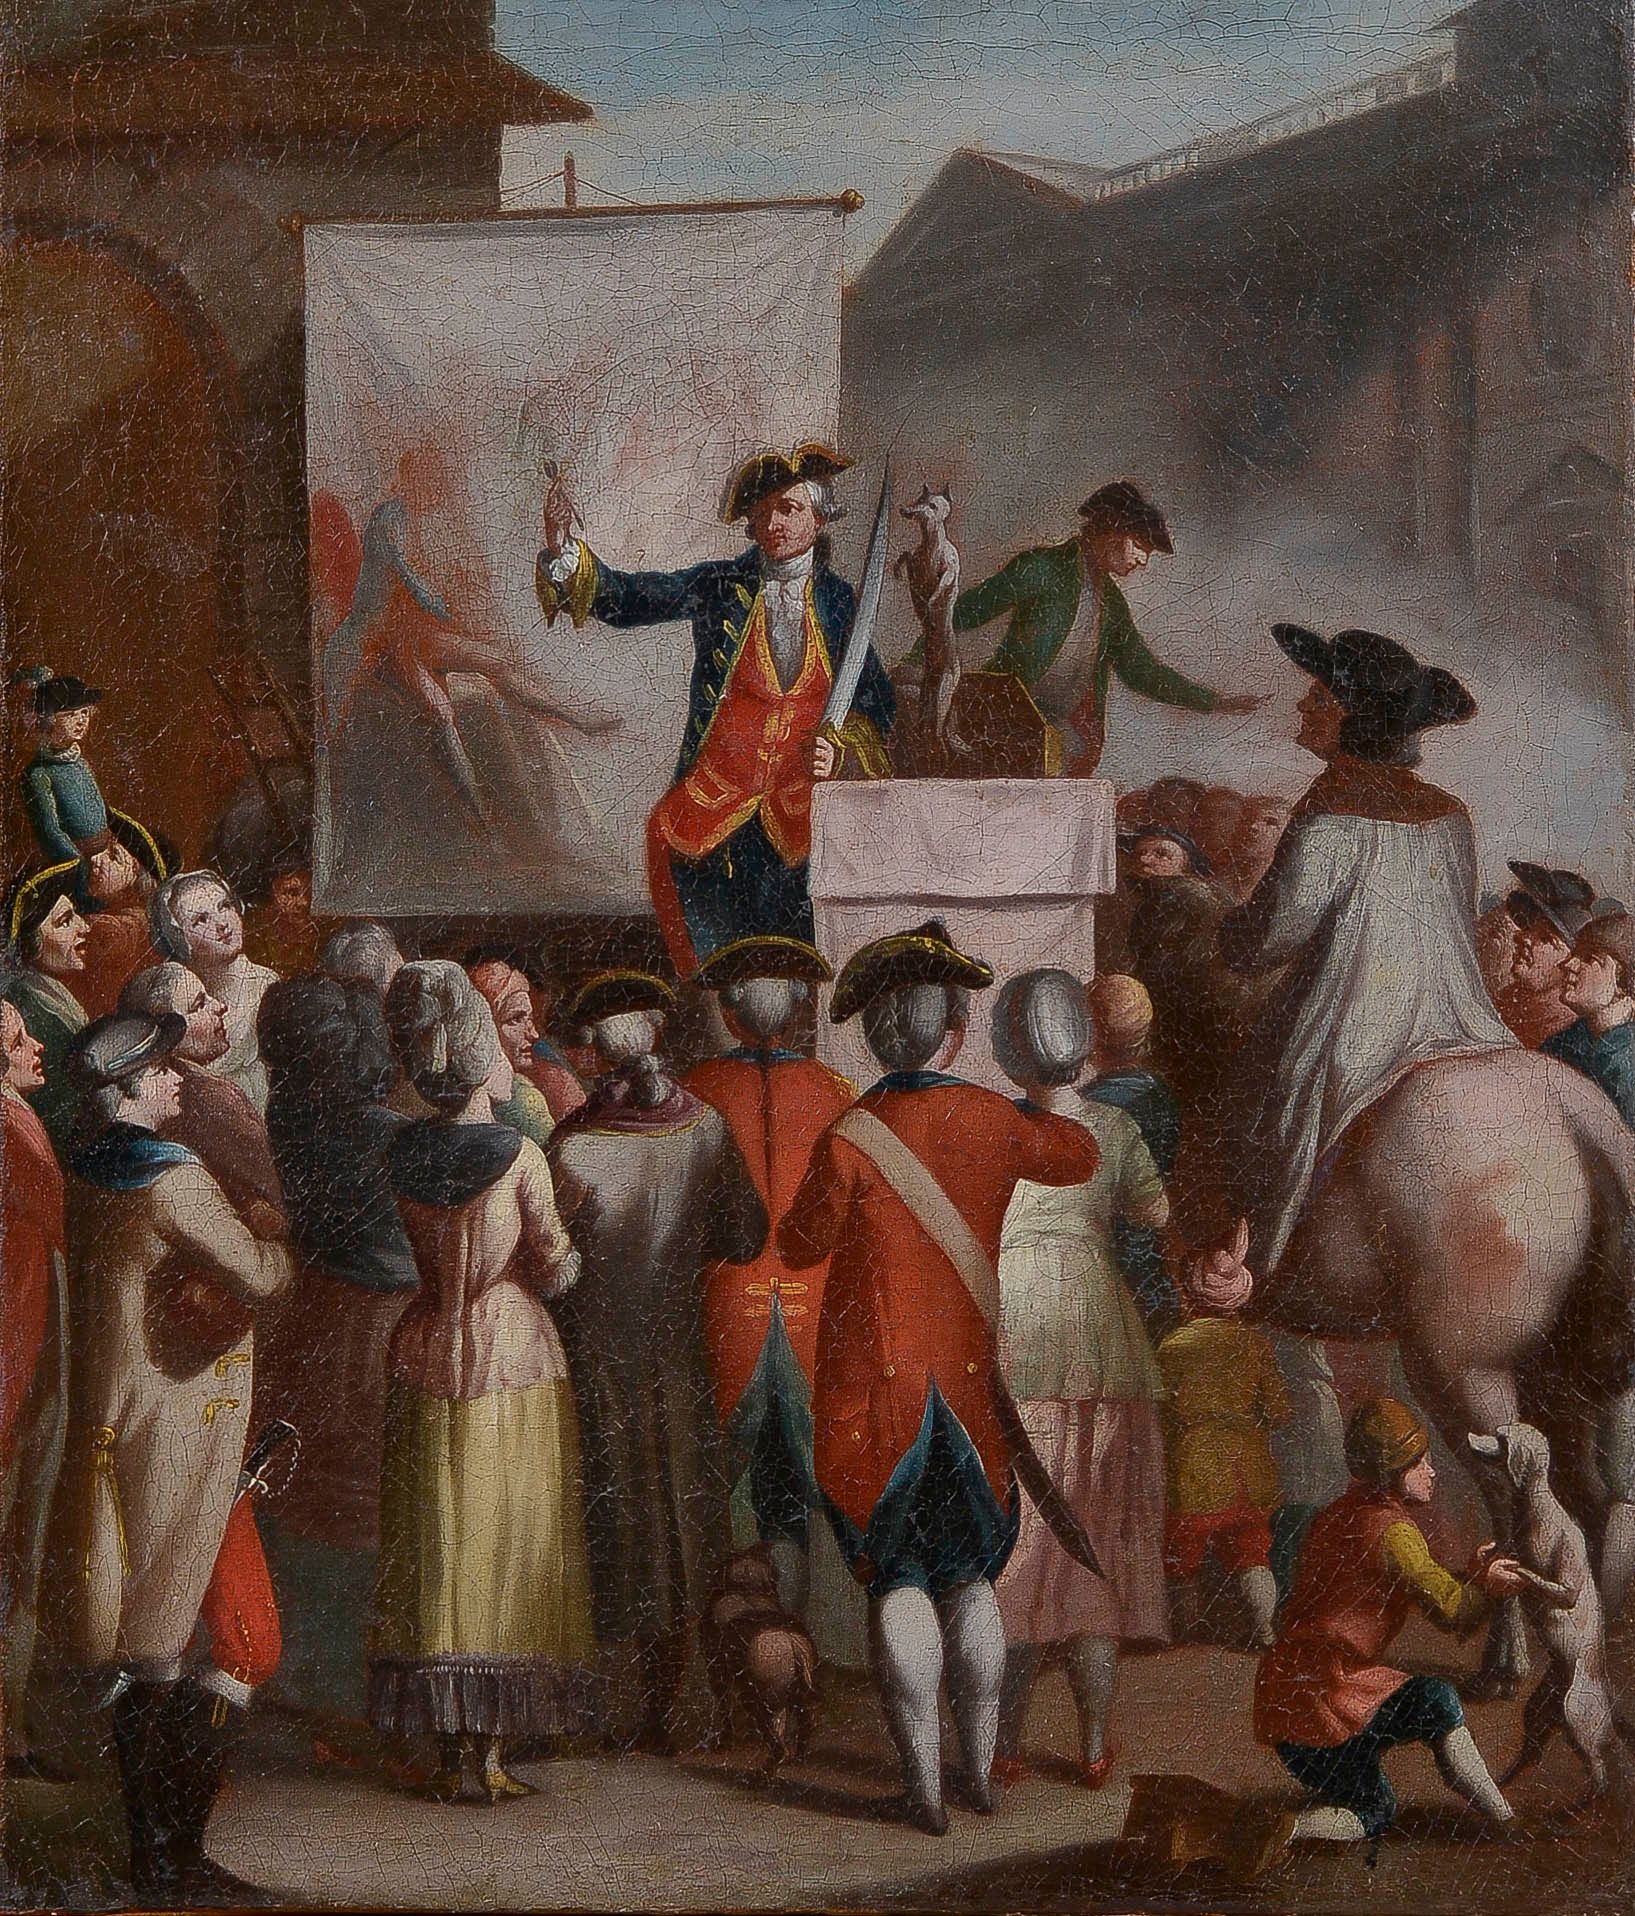 Null 法国学校，约1770年

杂技演员

布面油画

74 x 62 cm